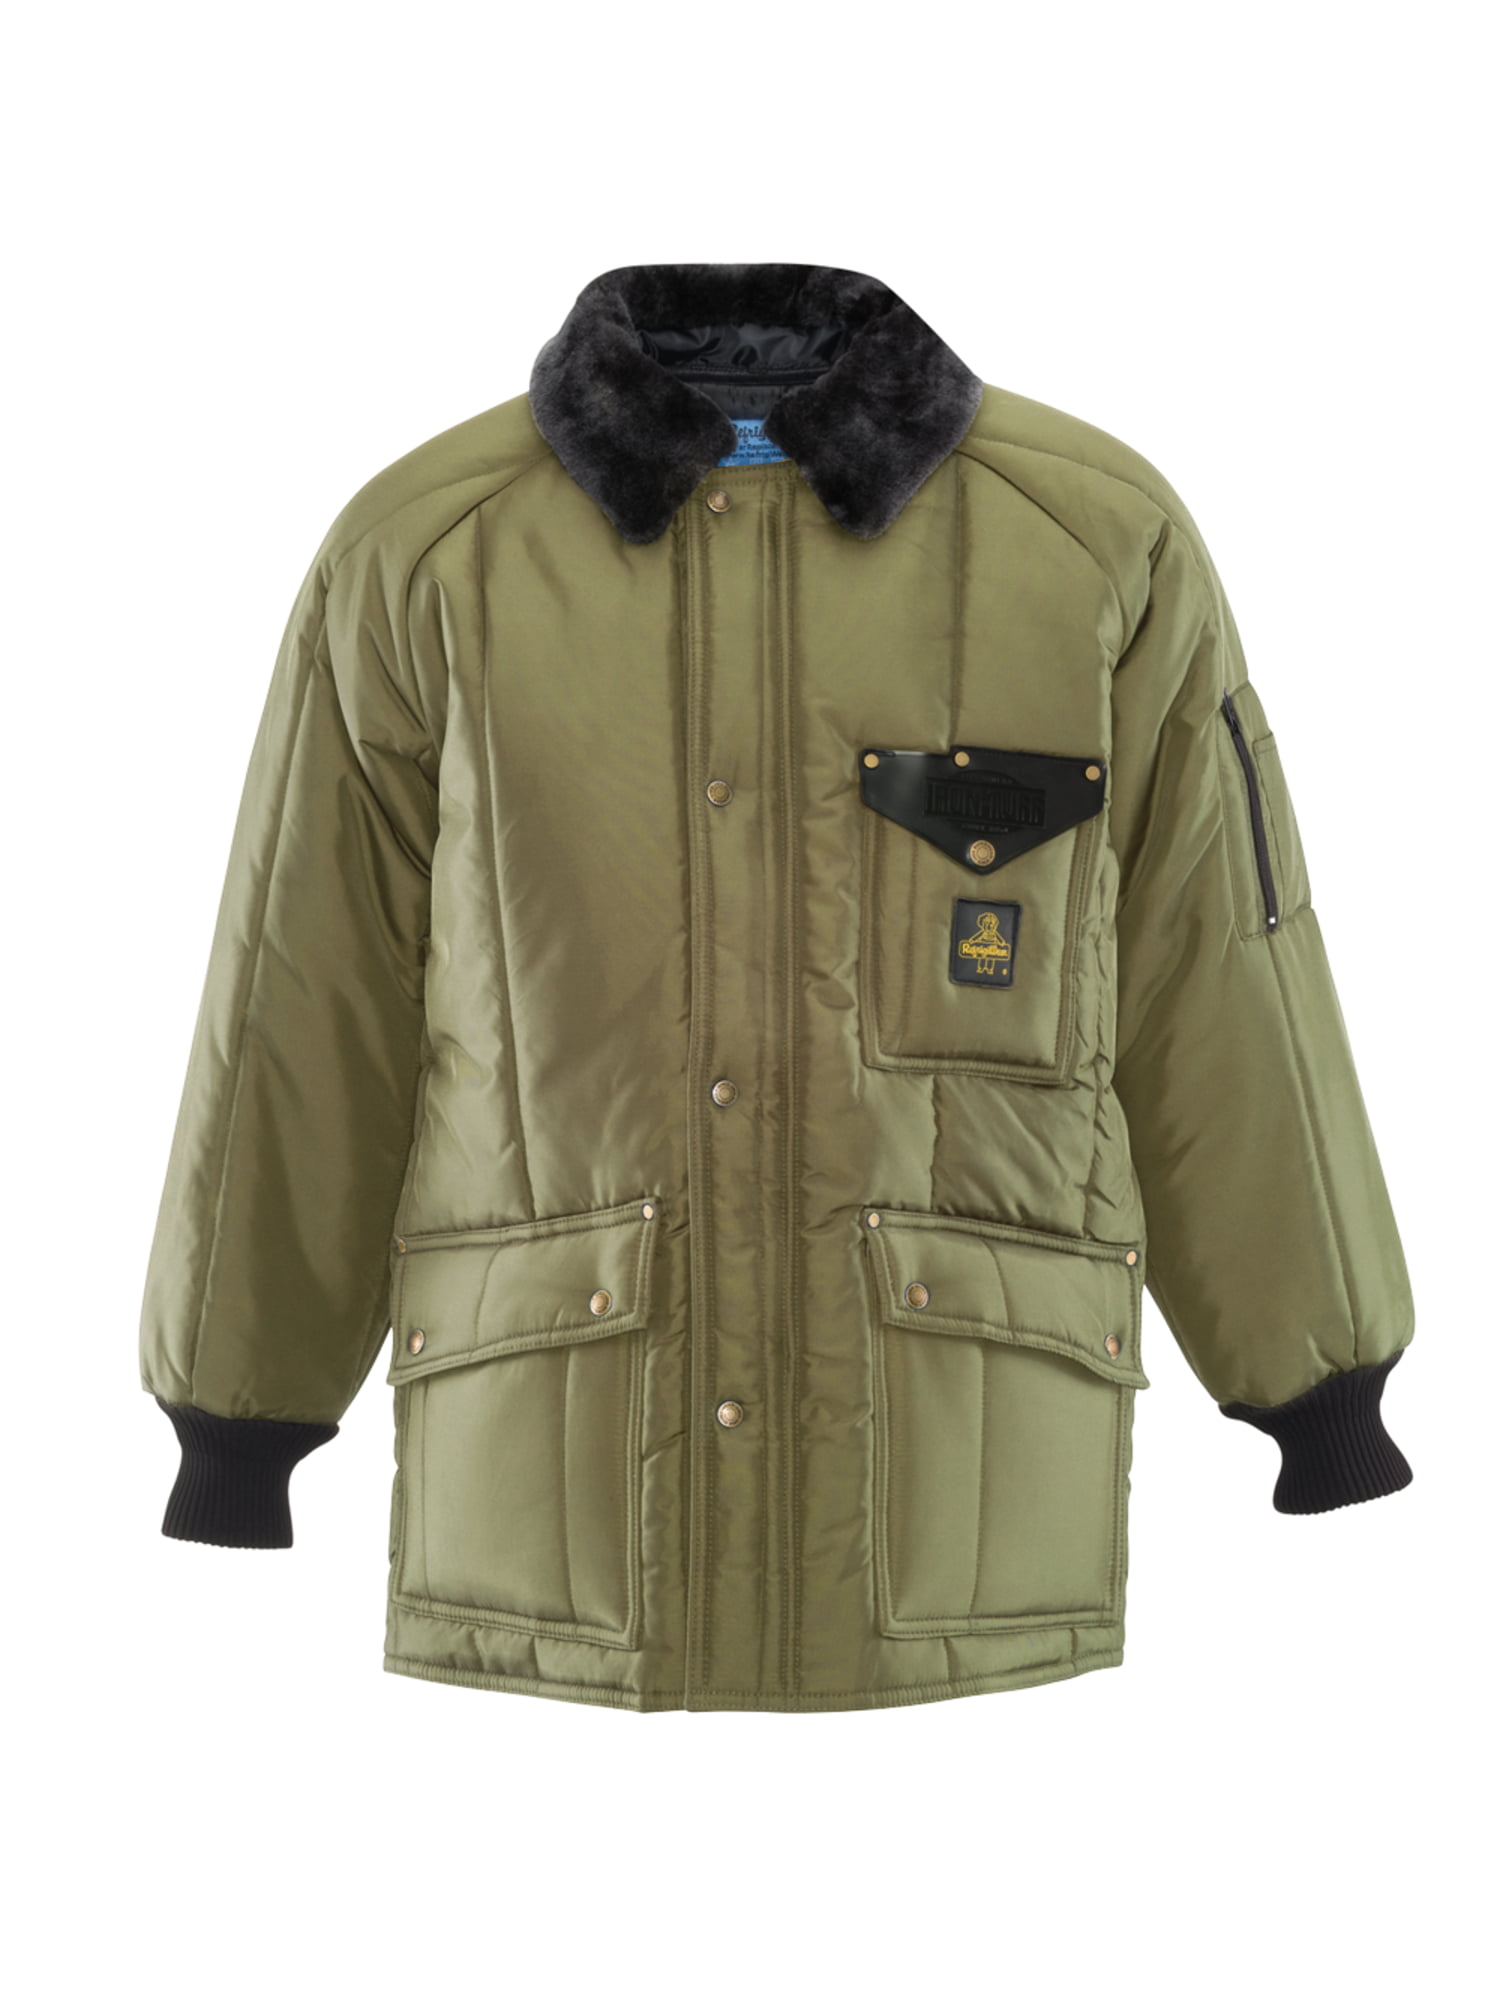 RefrigiWear Mens Water-Resistant Insulated Iron-Tuff Siberian Workwear Jacket with Soft Fleece Collar